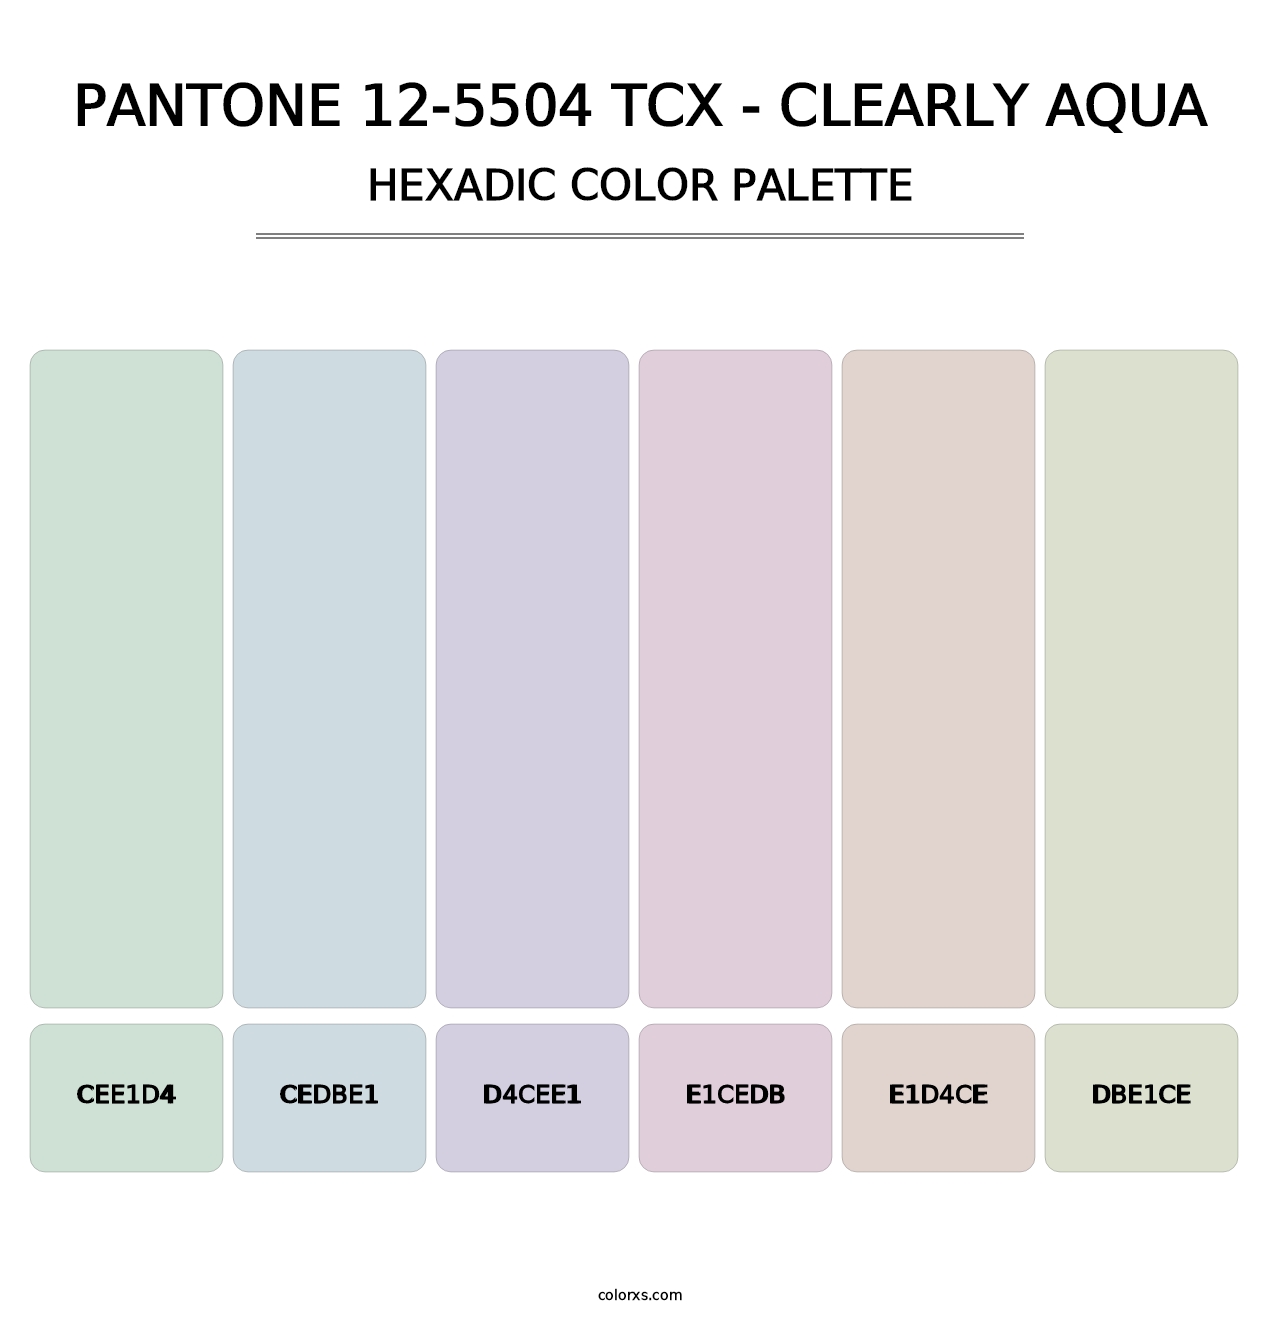 PANTONE 12-5504 TCX - Clearly Aqua - Hexadic Color Palette